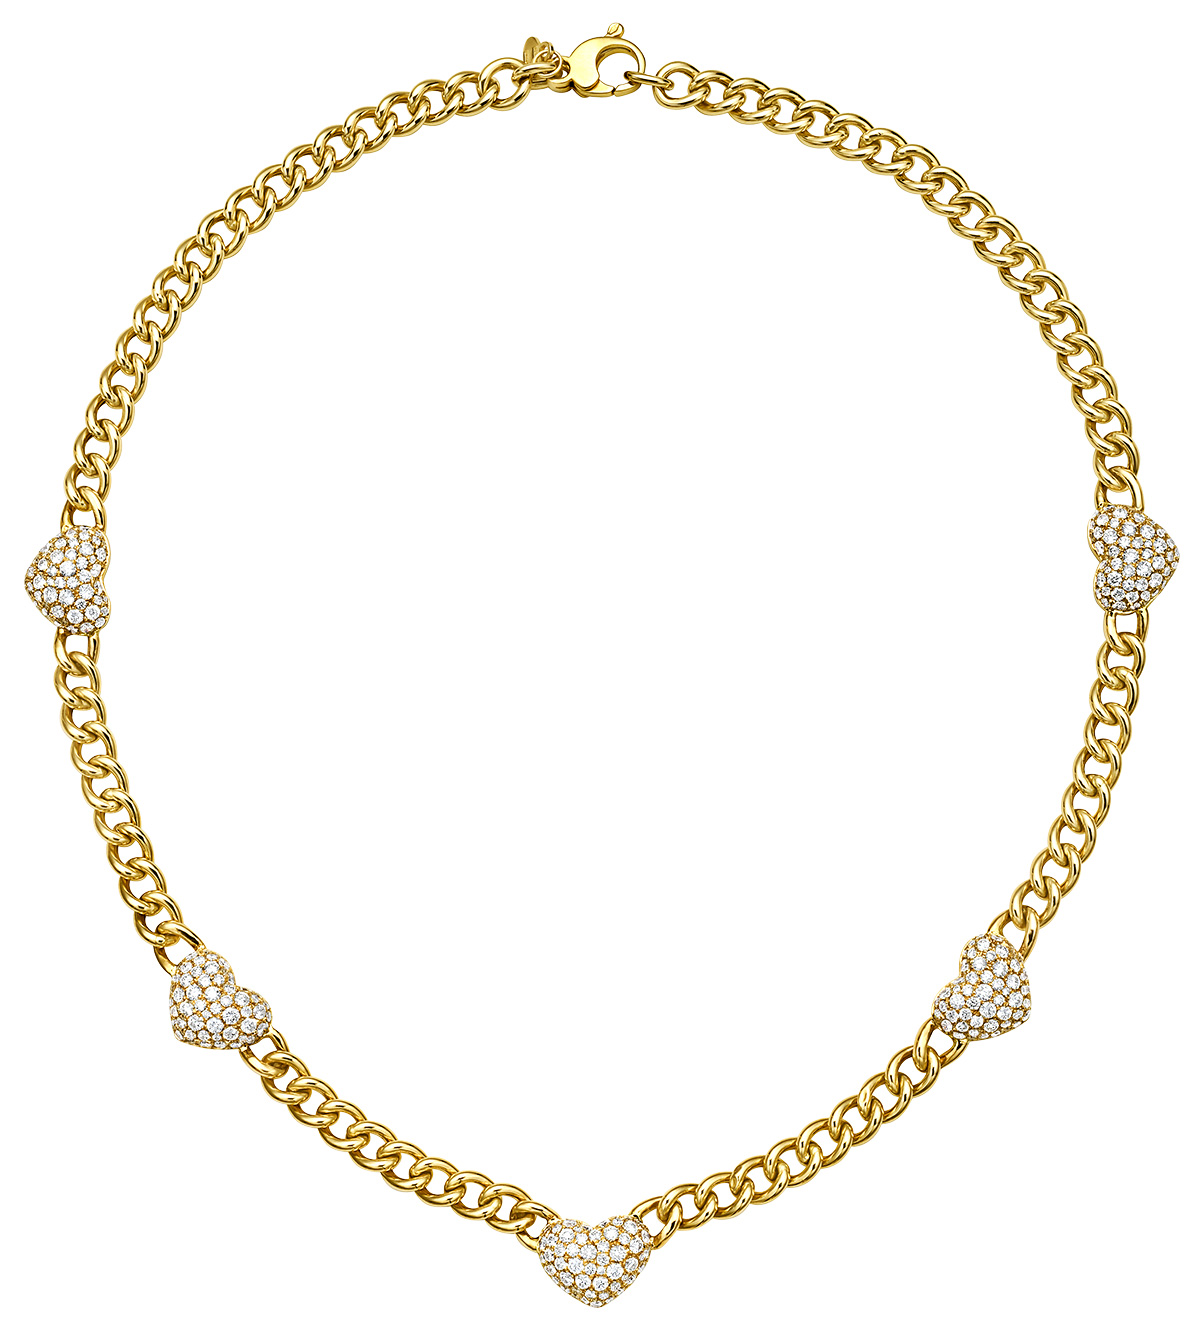 Lionheart diamond heart curb link necklace